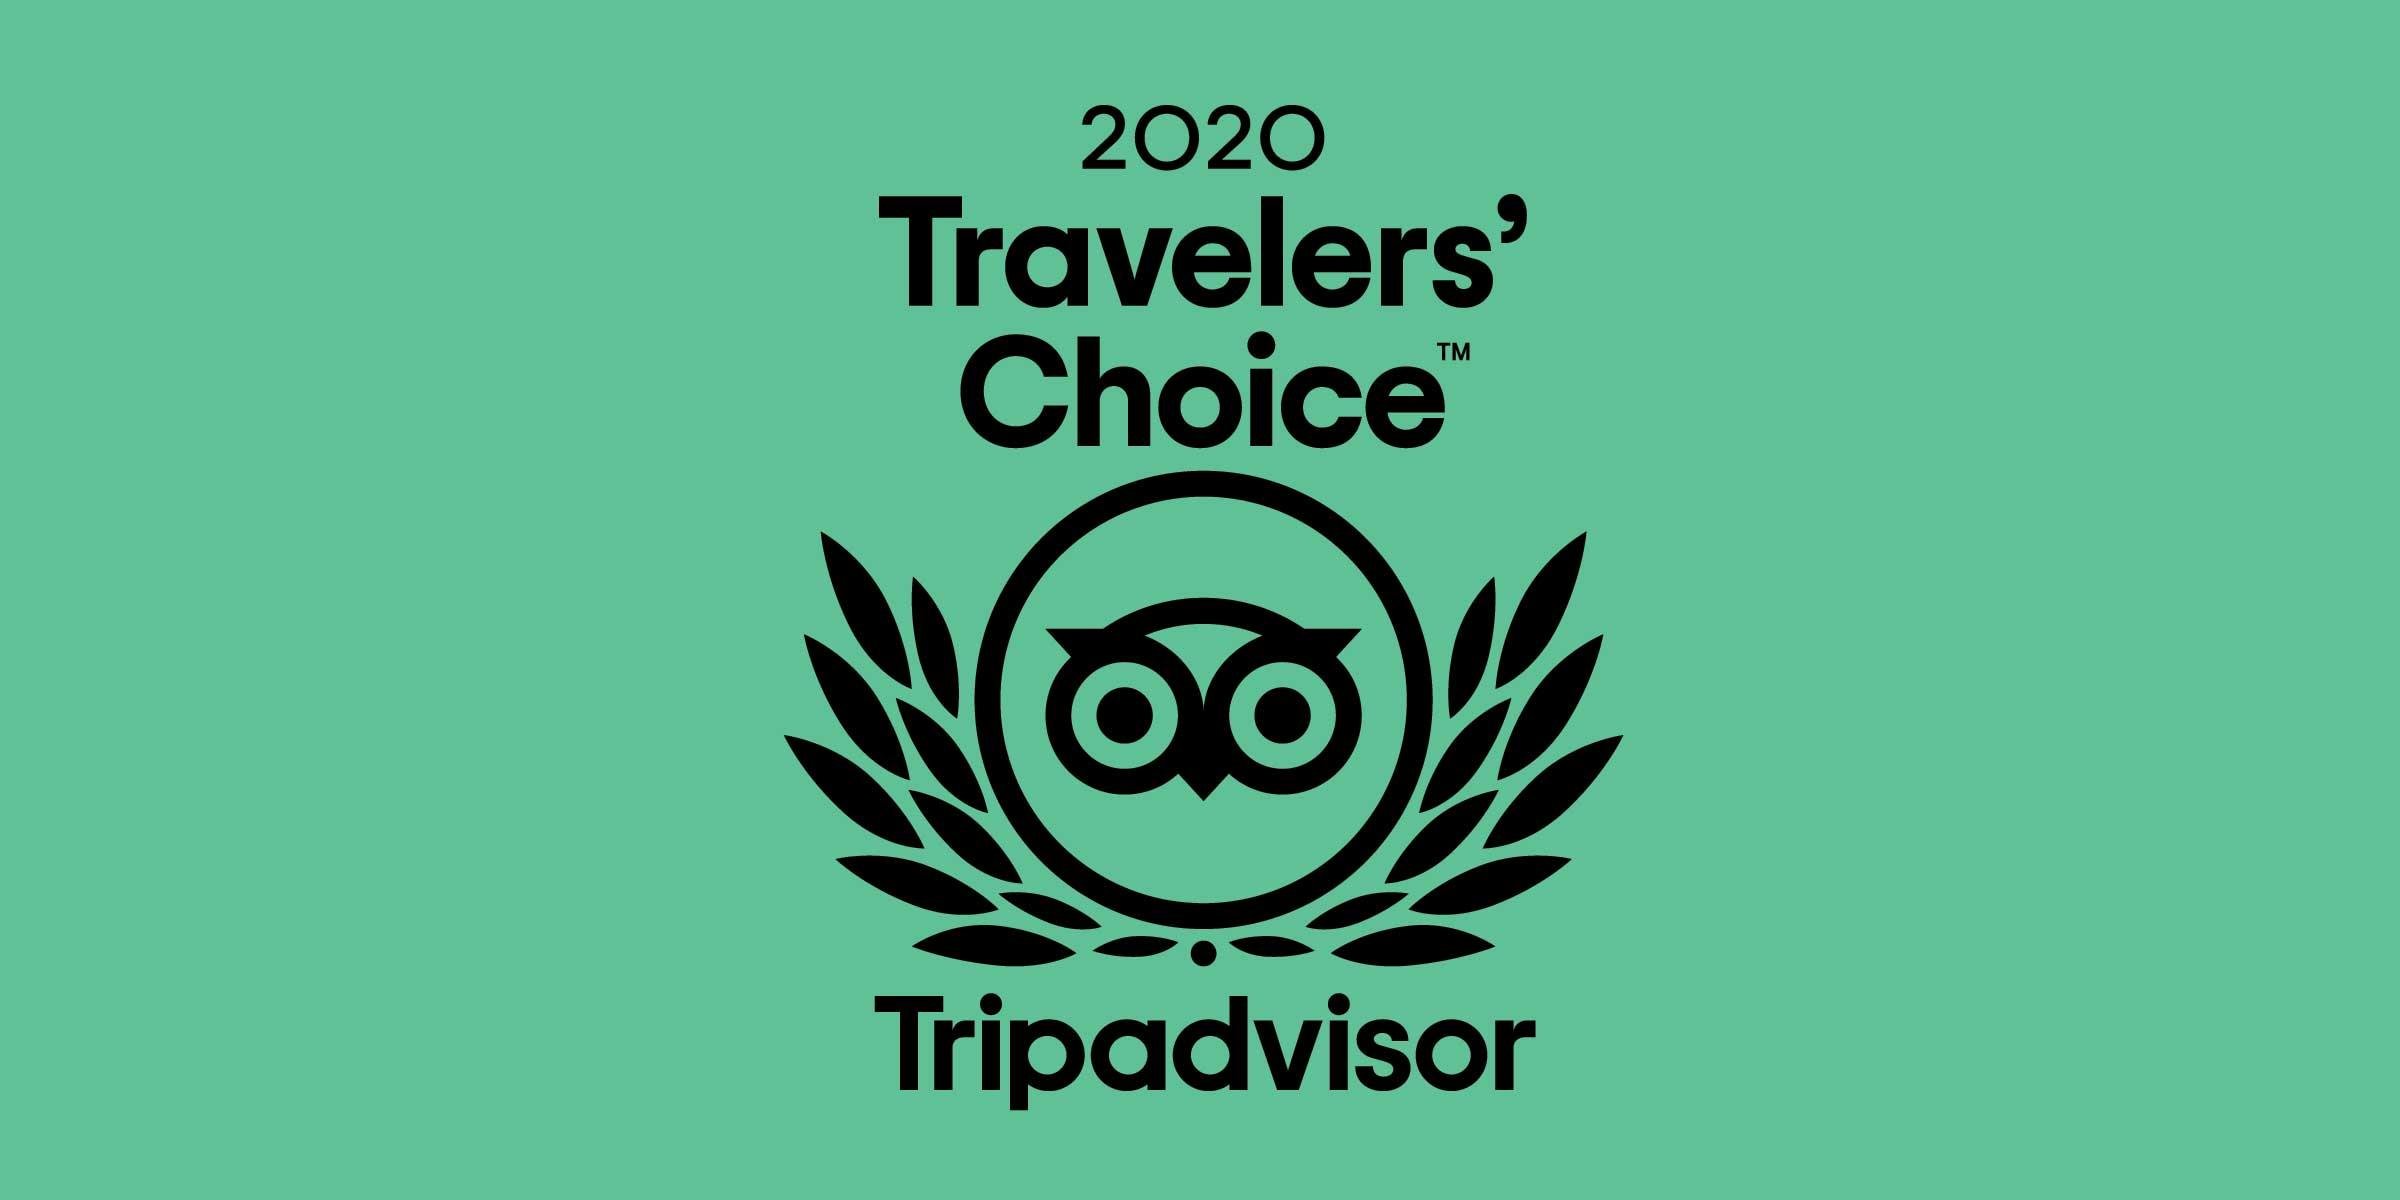 Travel choice. TRIPADVISOR travellers choice 2021. Traveller's choice 2022. TRIPADVISOR choice логотип. Награда travellers' choice.